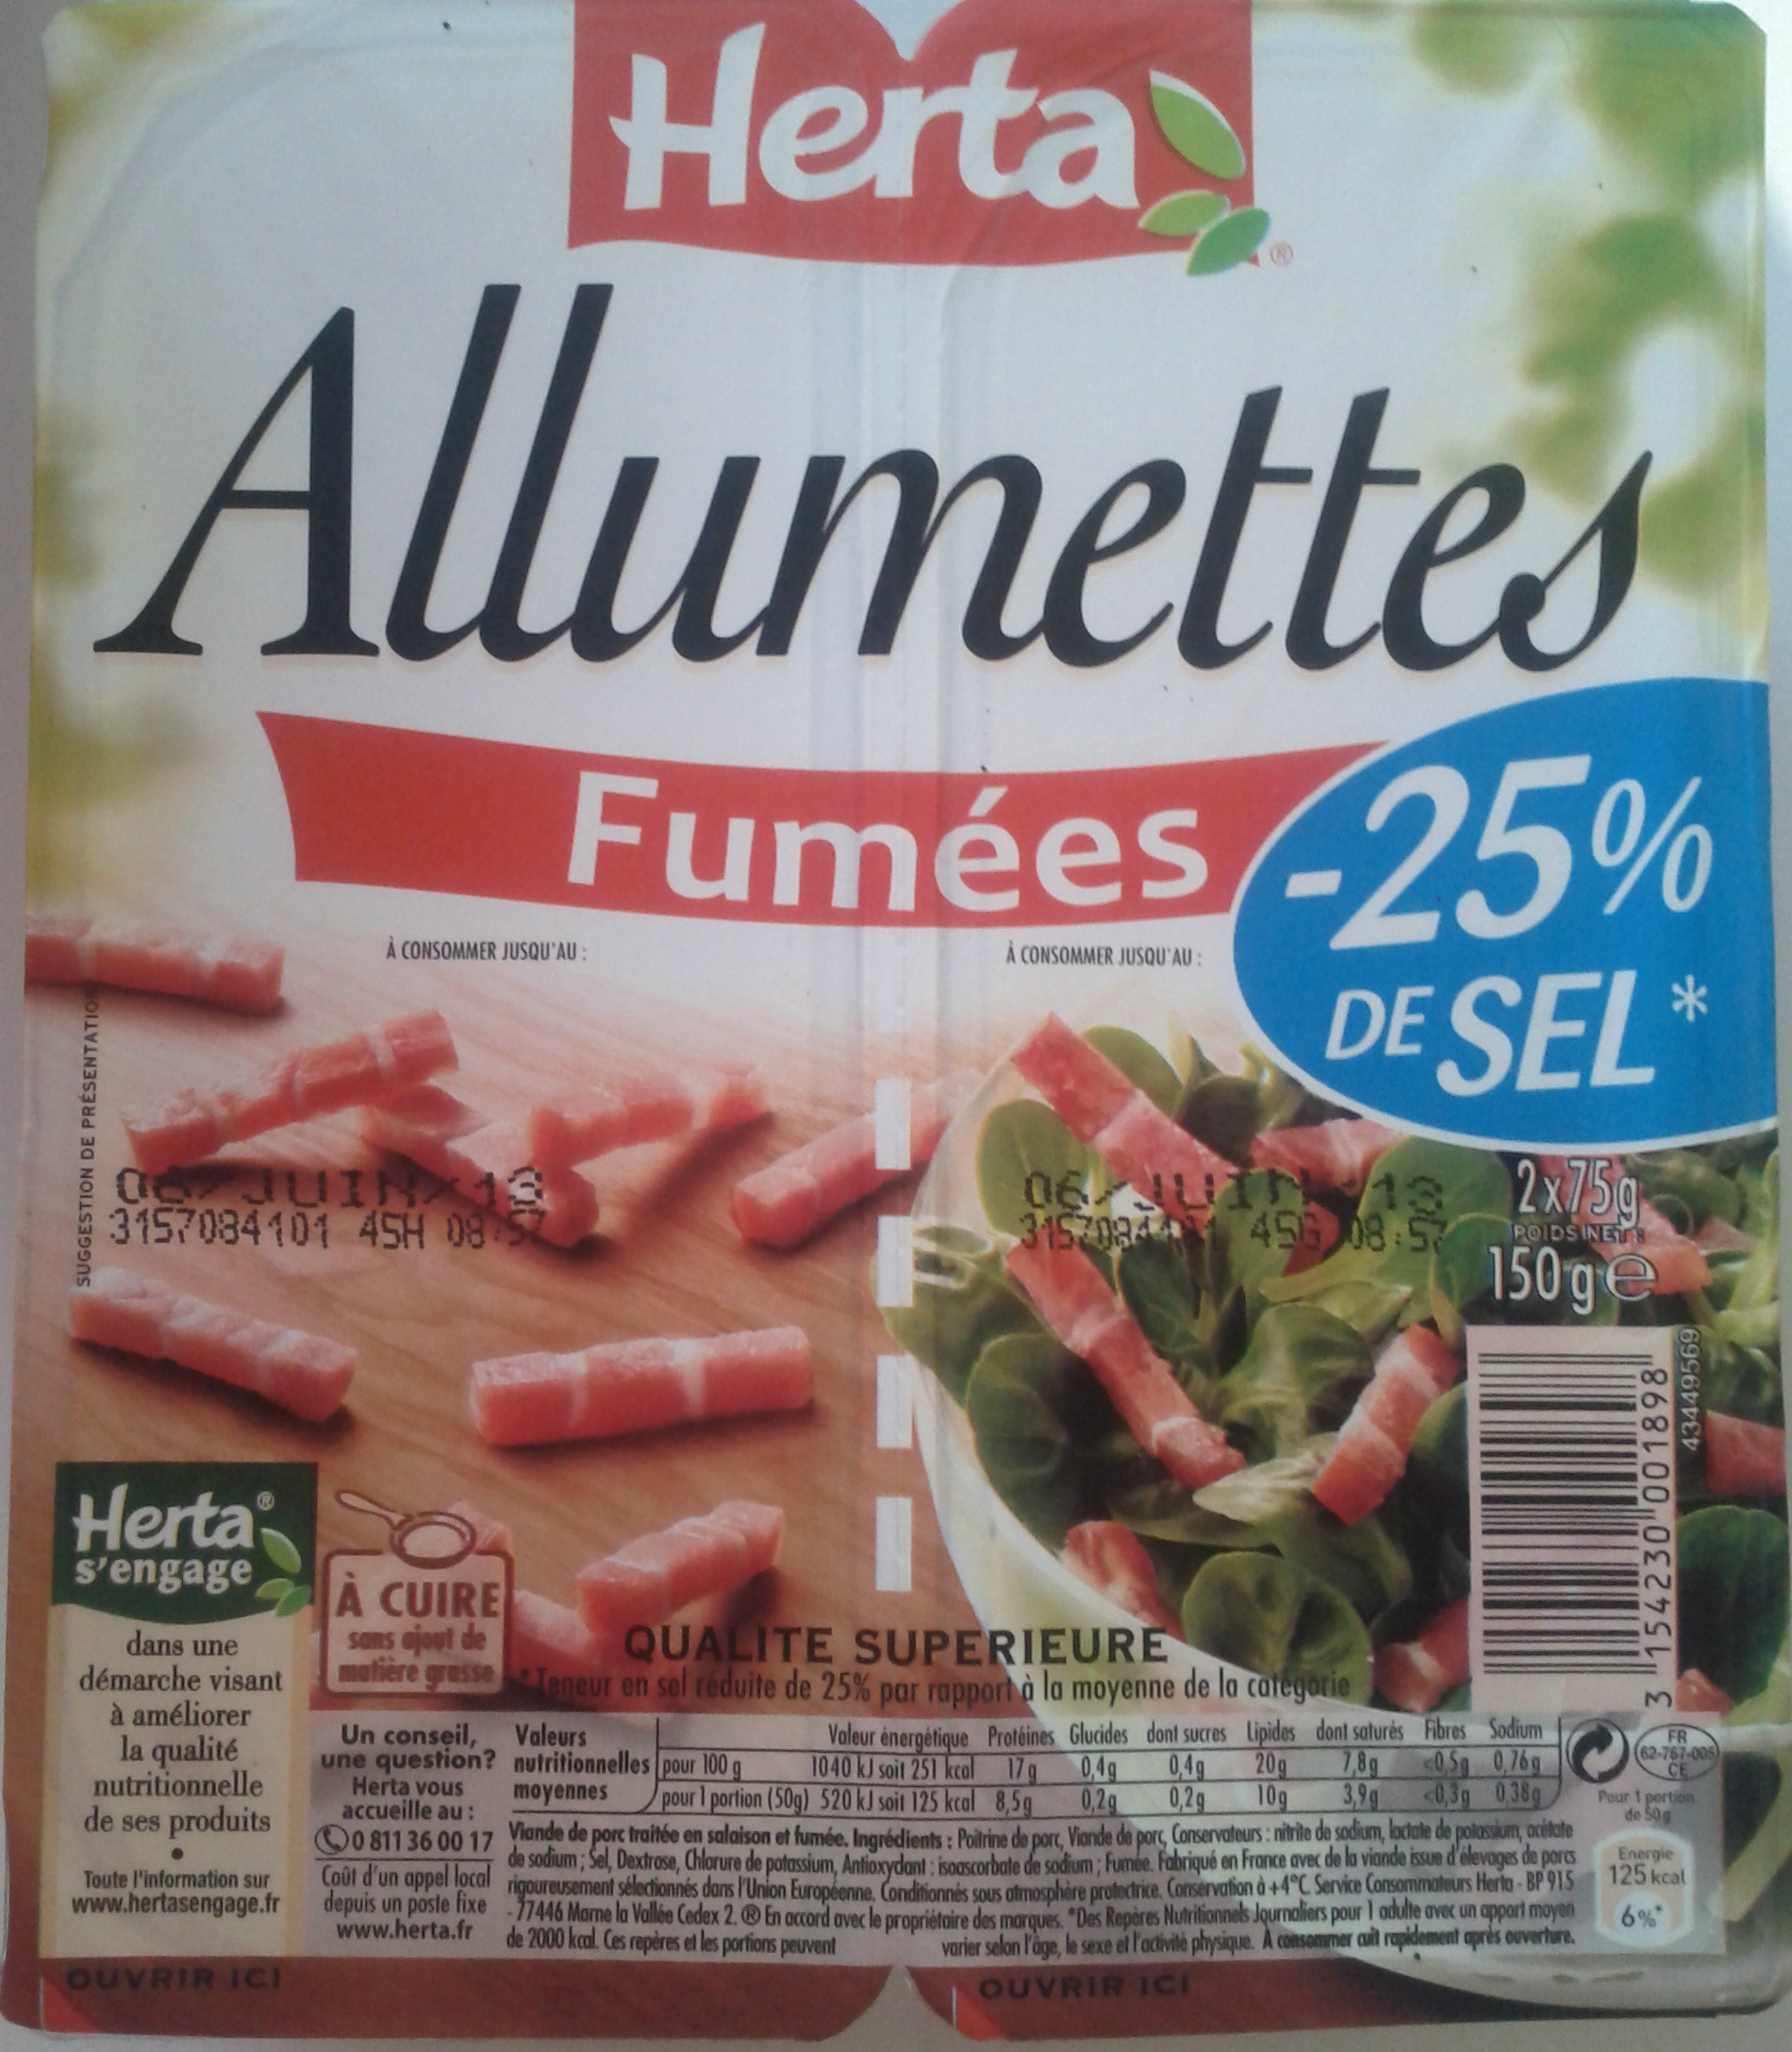 Allumettes, Fumées (- 25 % de Sel) - Product - fr